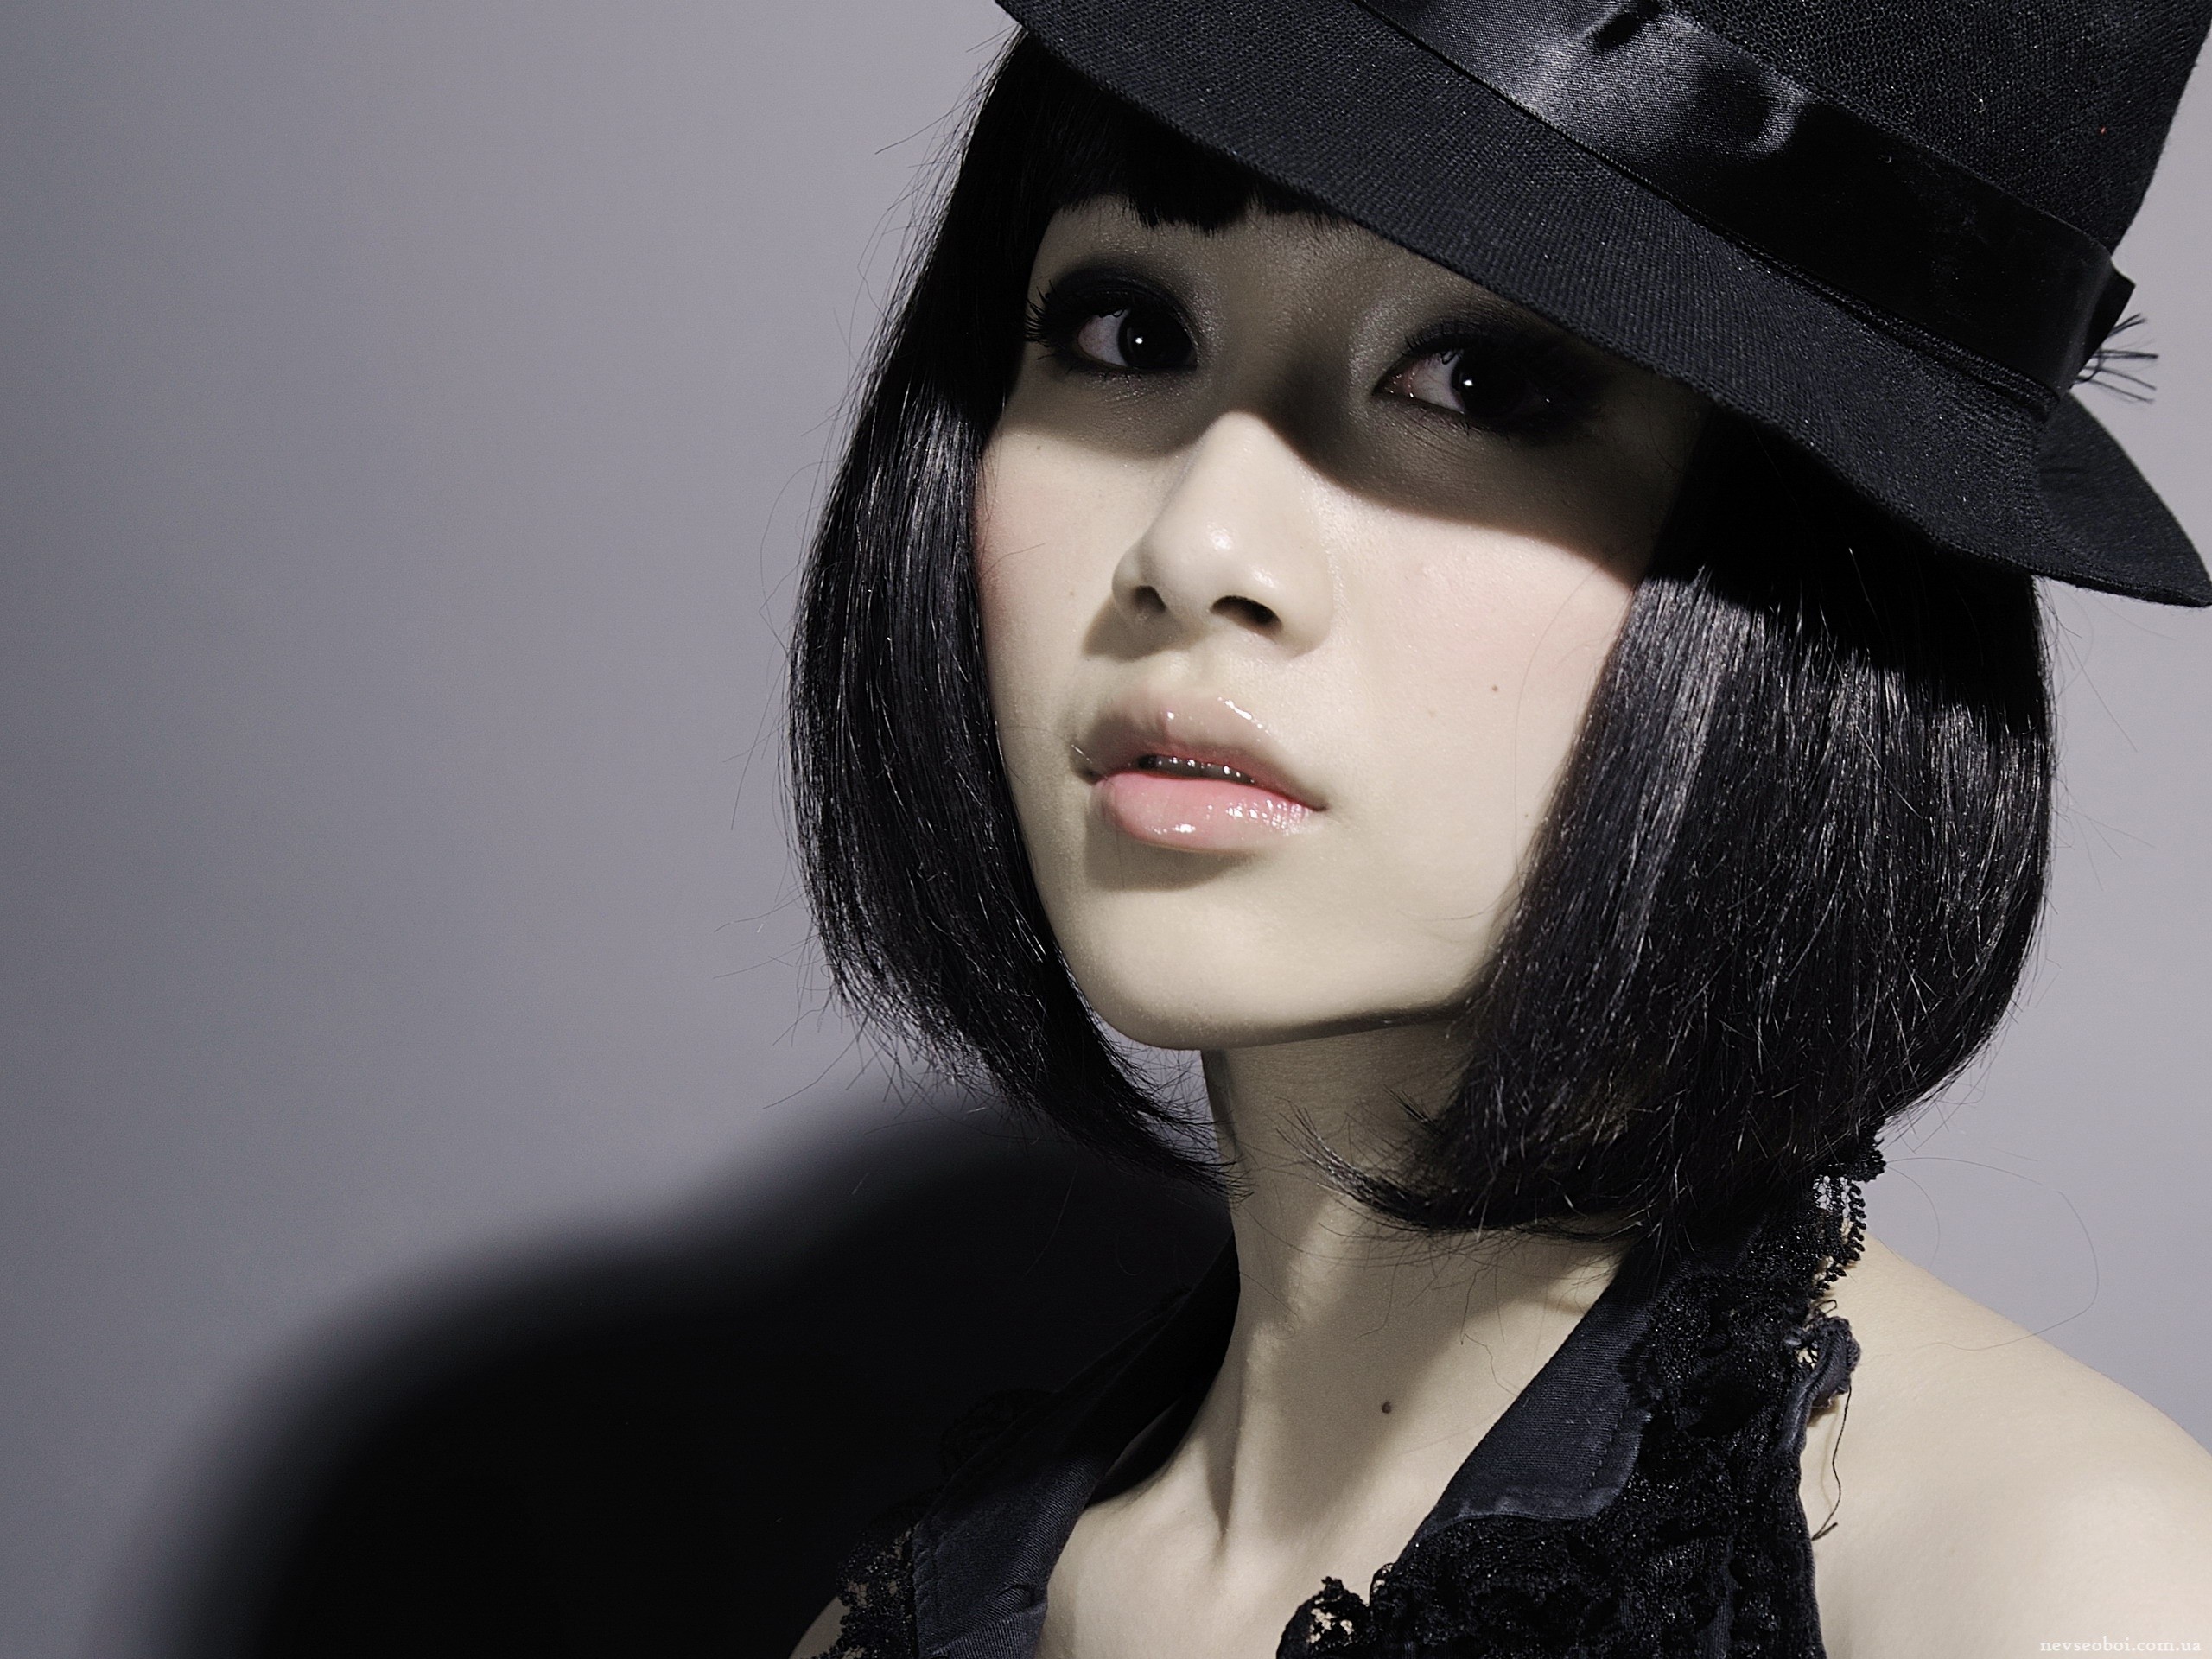 asian women face black hair funny hats short hair pale Wallpaper